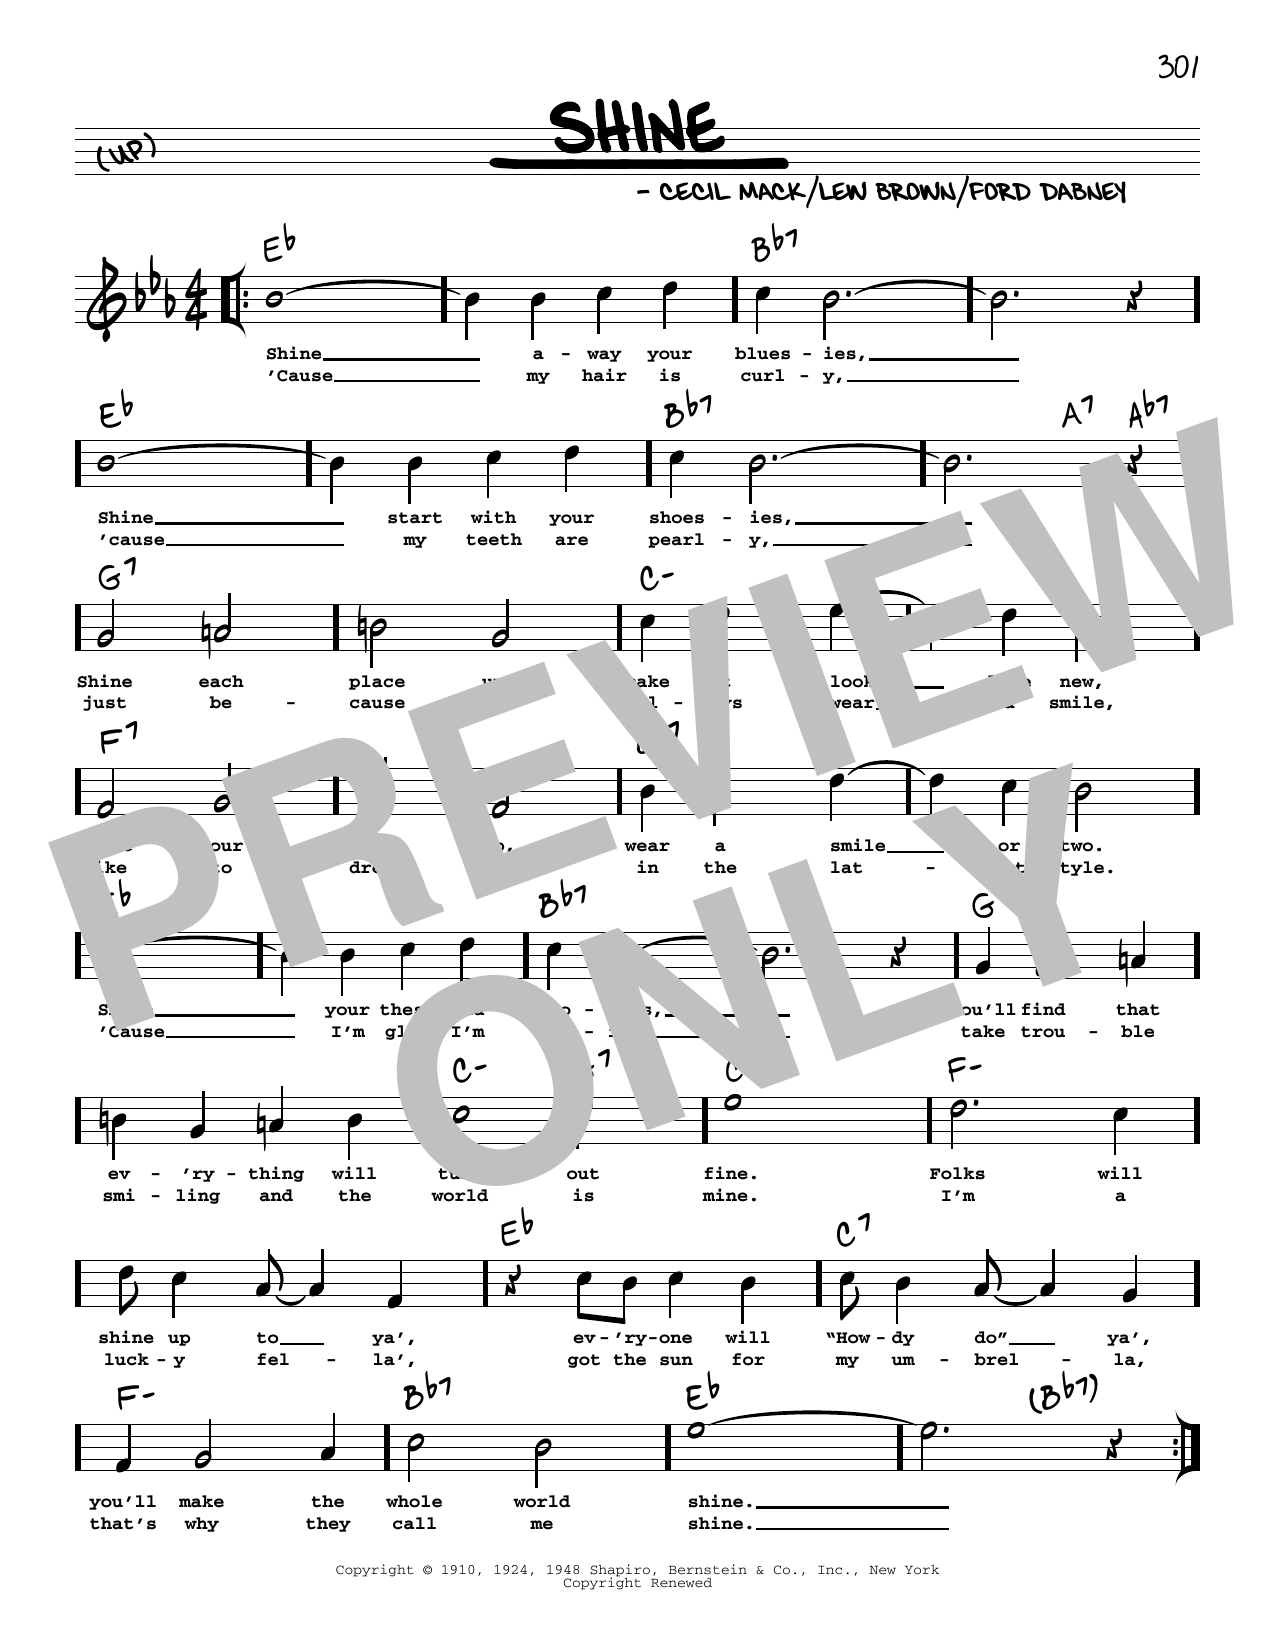 Cecil Mack Shine (arr. Robert Rawlins) Sheet Music Notes & Chords for Real Book – Melody, Lyrics & Chords - Download or Print PDF